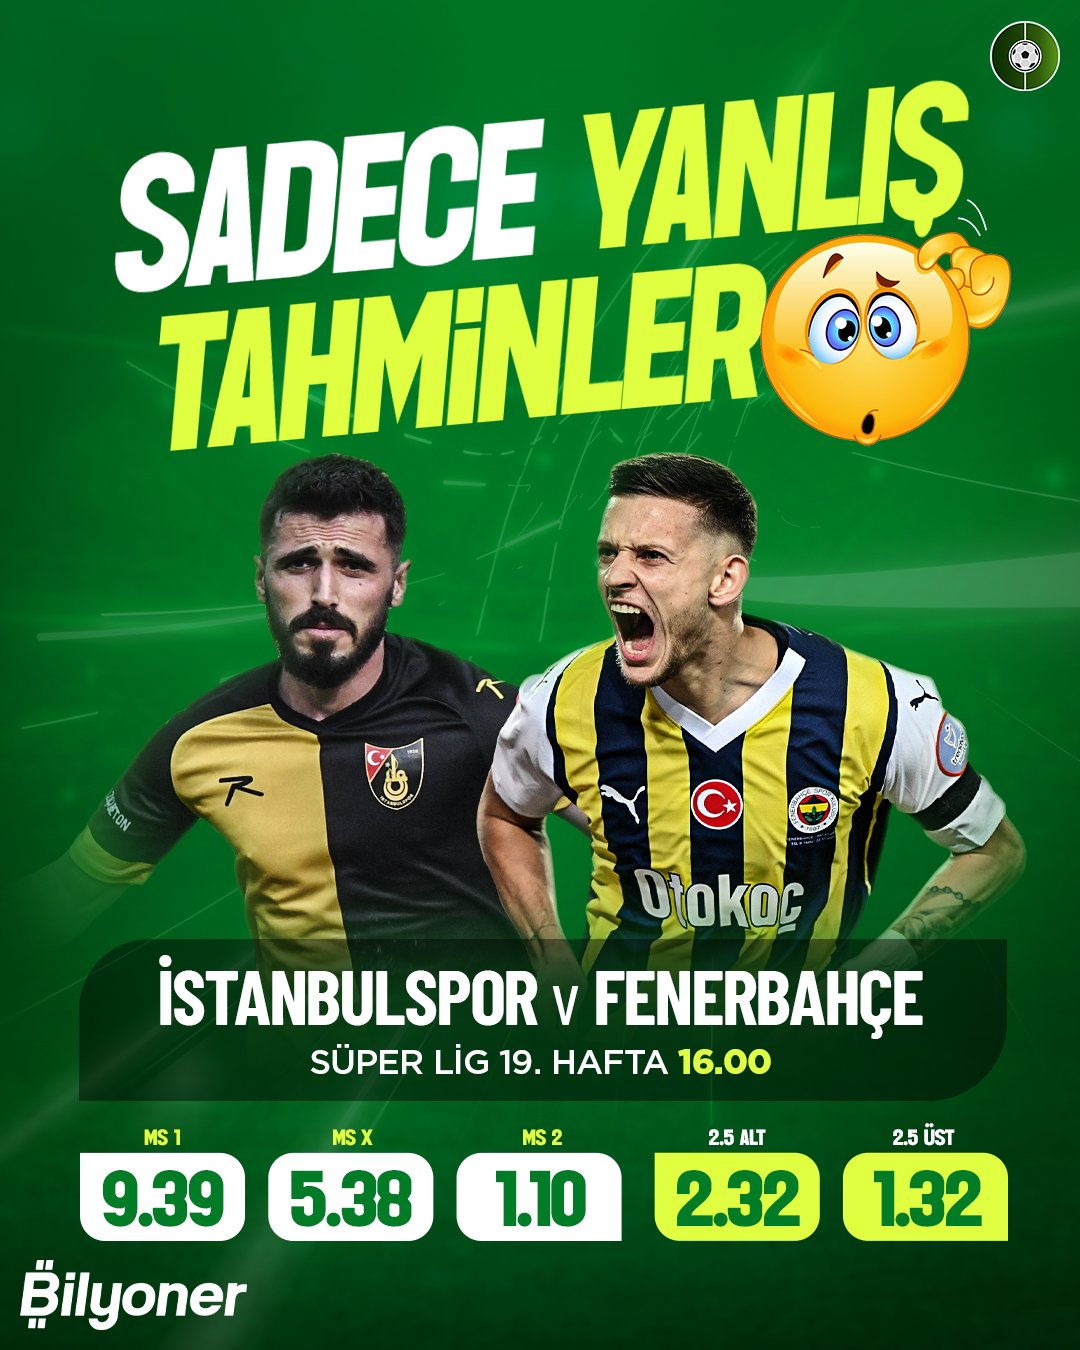 The Fenerbahçe vs Galatasaray Rivalry: A Clash of Titans